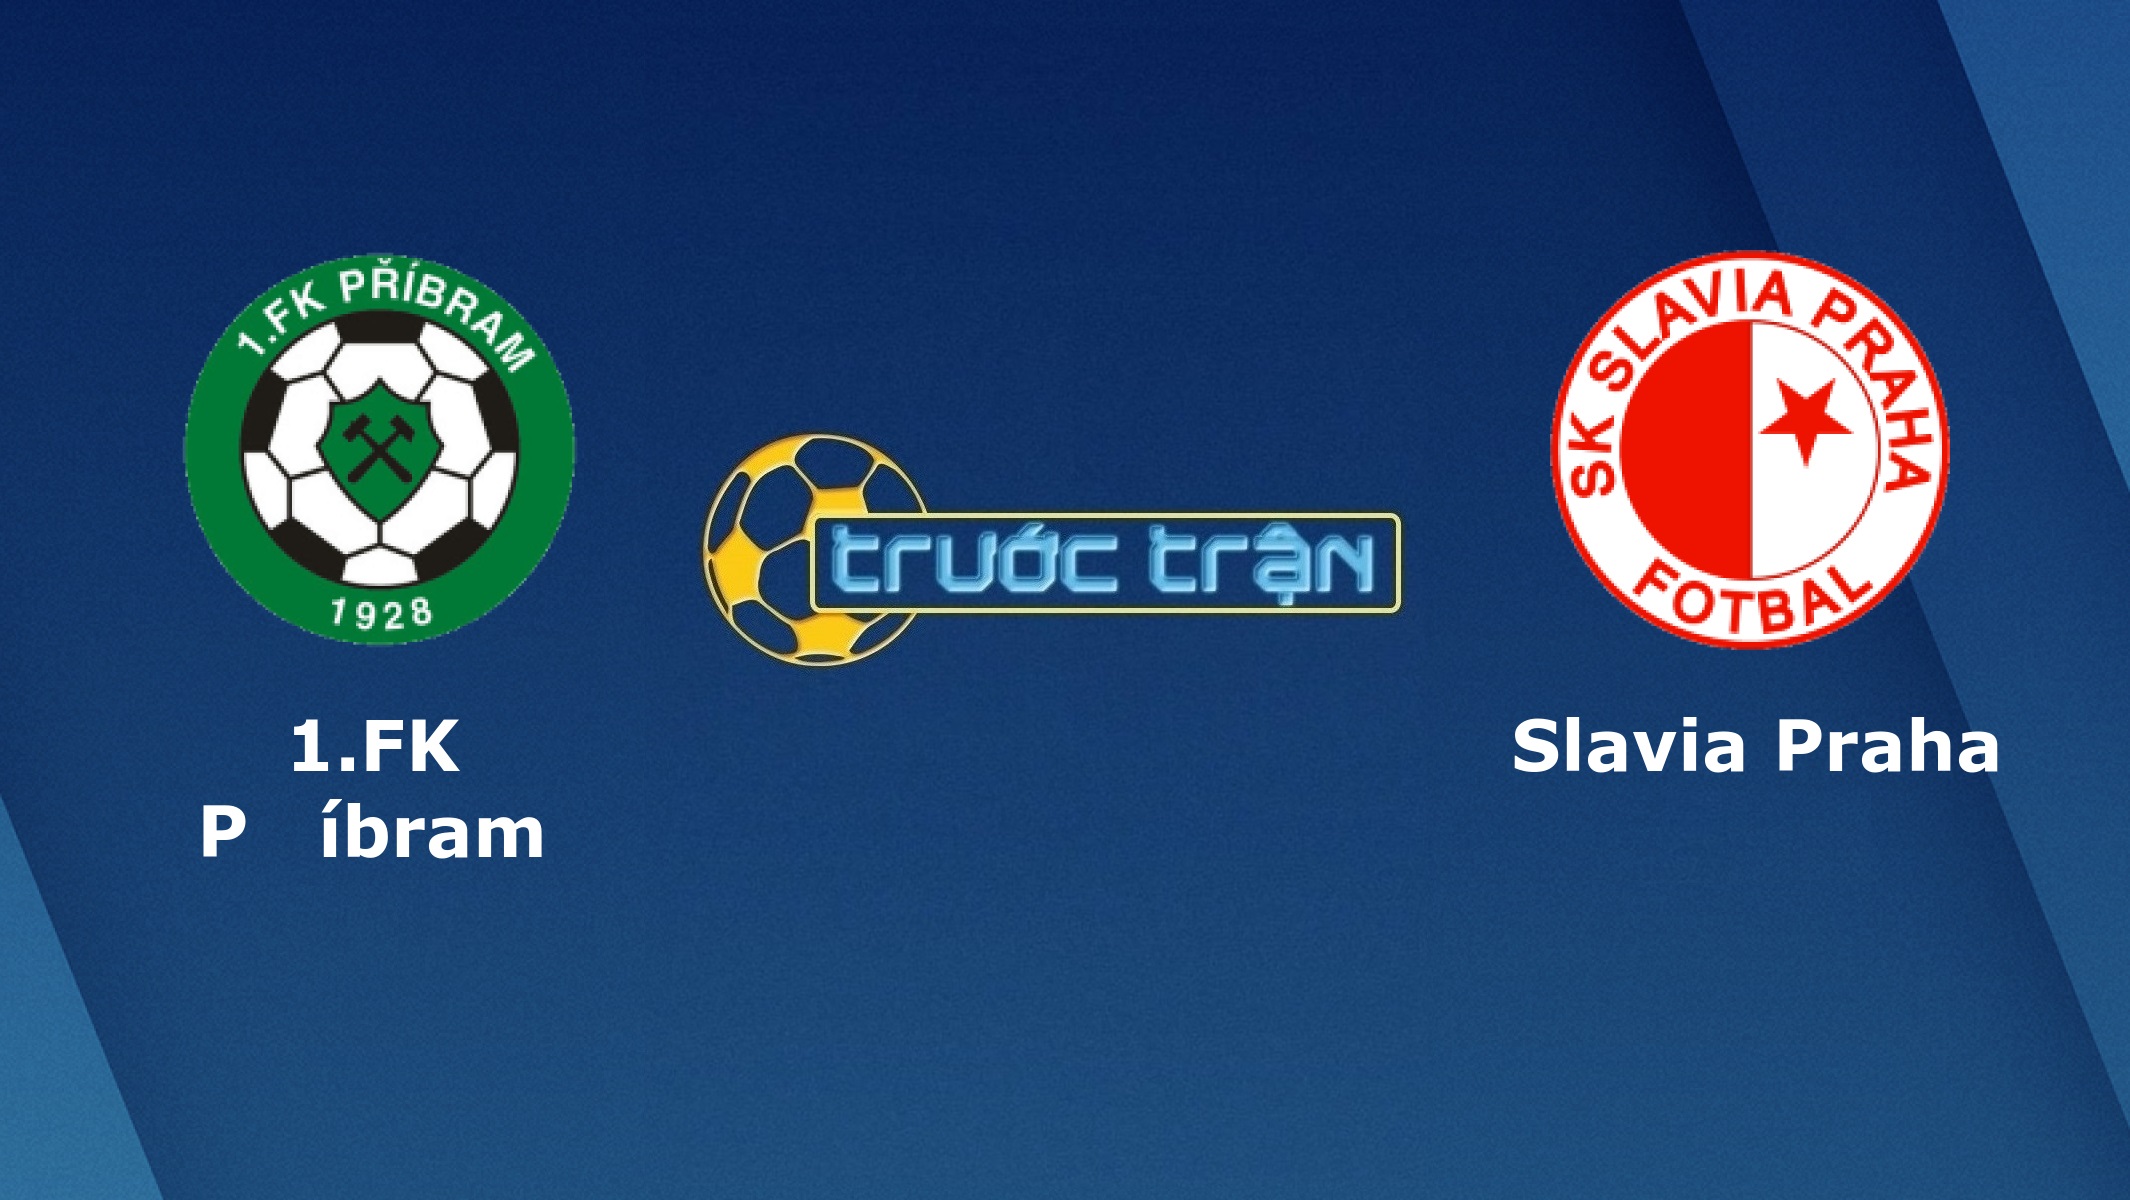 FK Pribram vs Slavia Praha – Tip kèo bóng đá hôm nay – 02/06